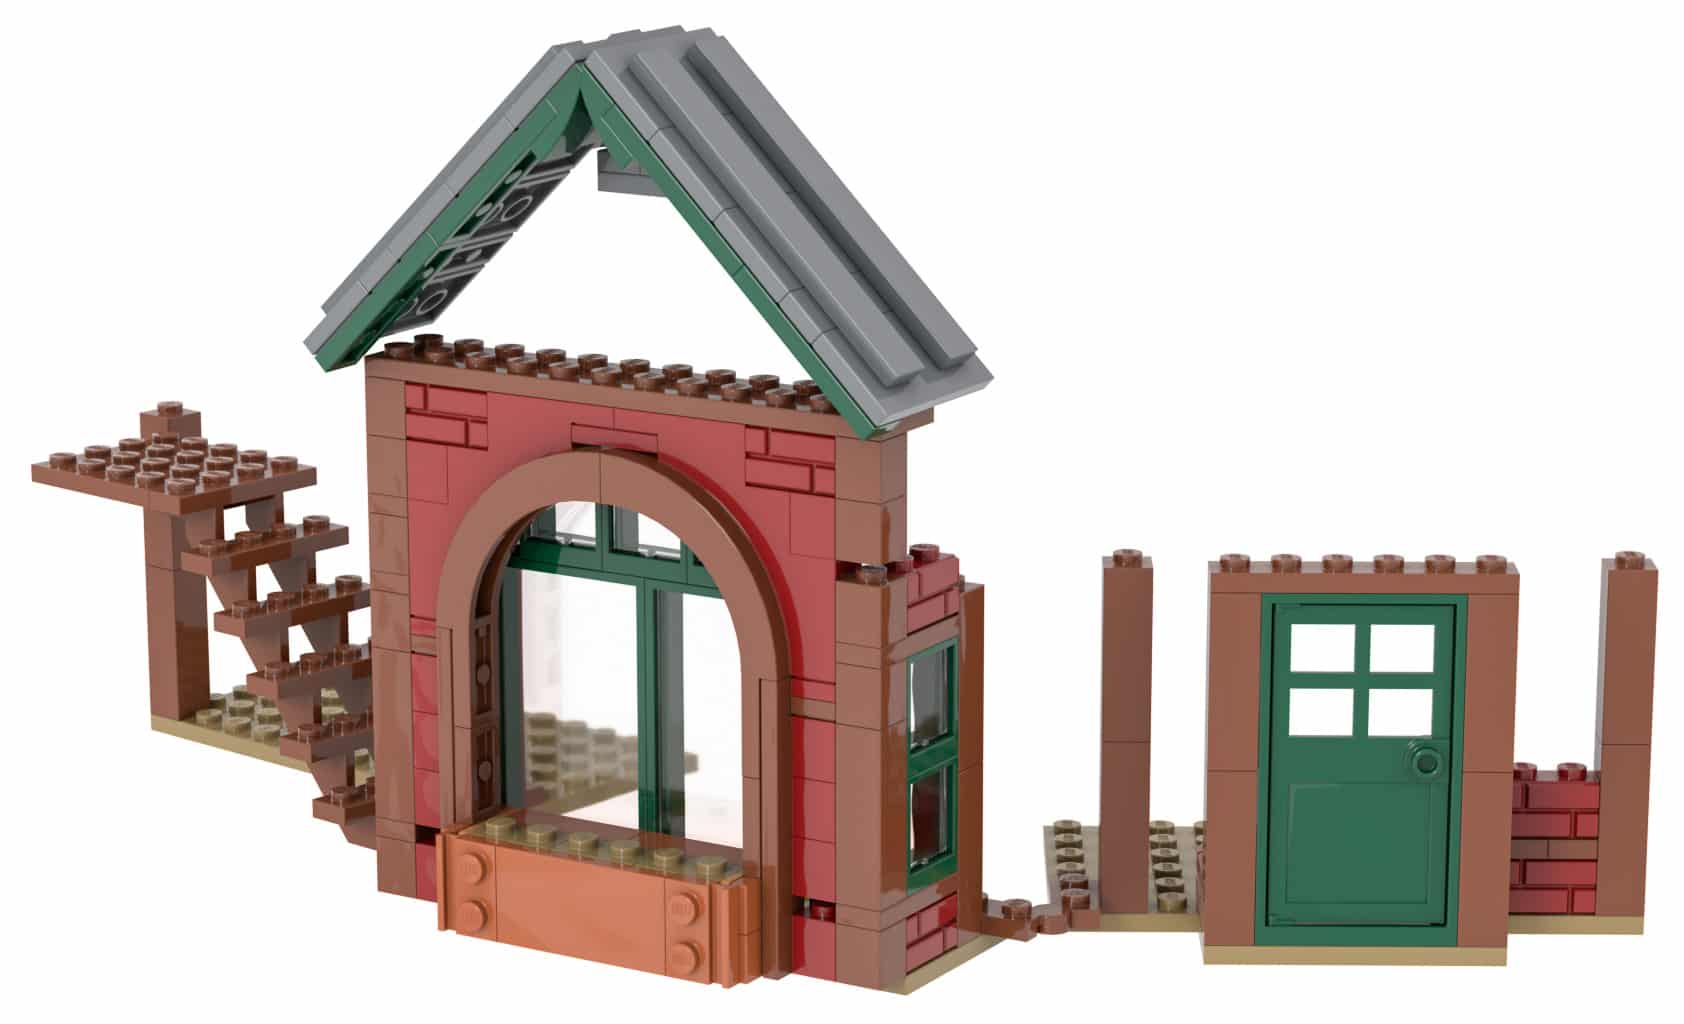 LEGO Bauernhof Farm Holidays Bricklink Designer Program 01